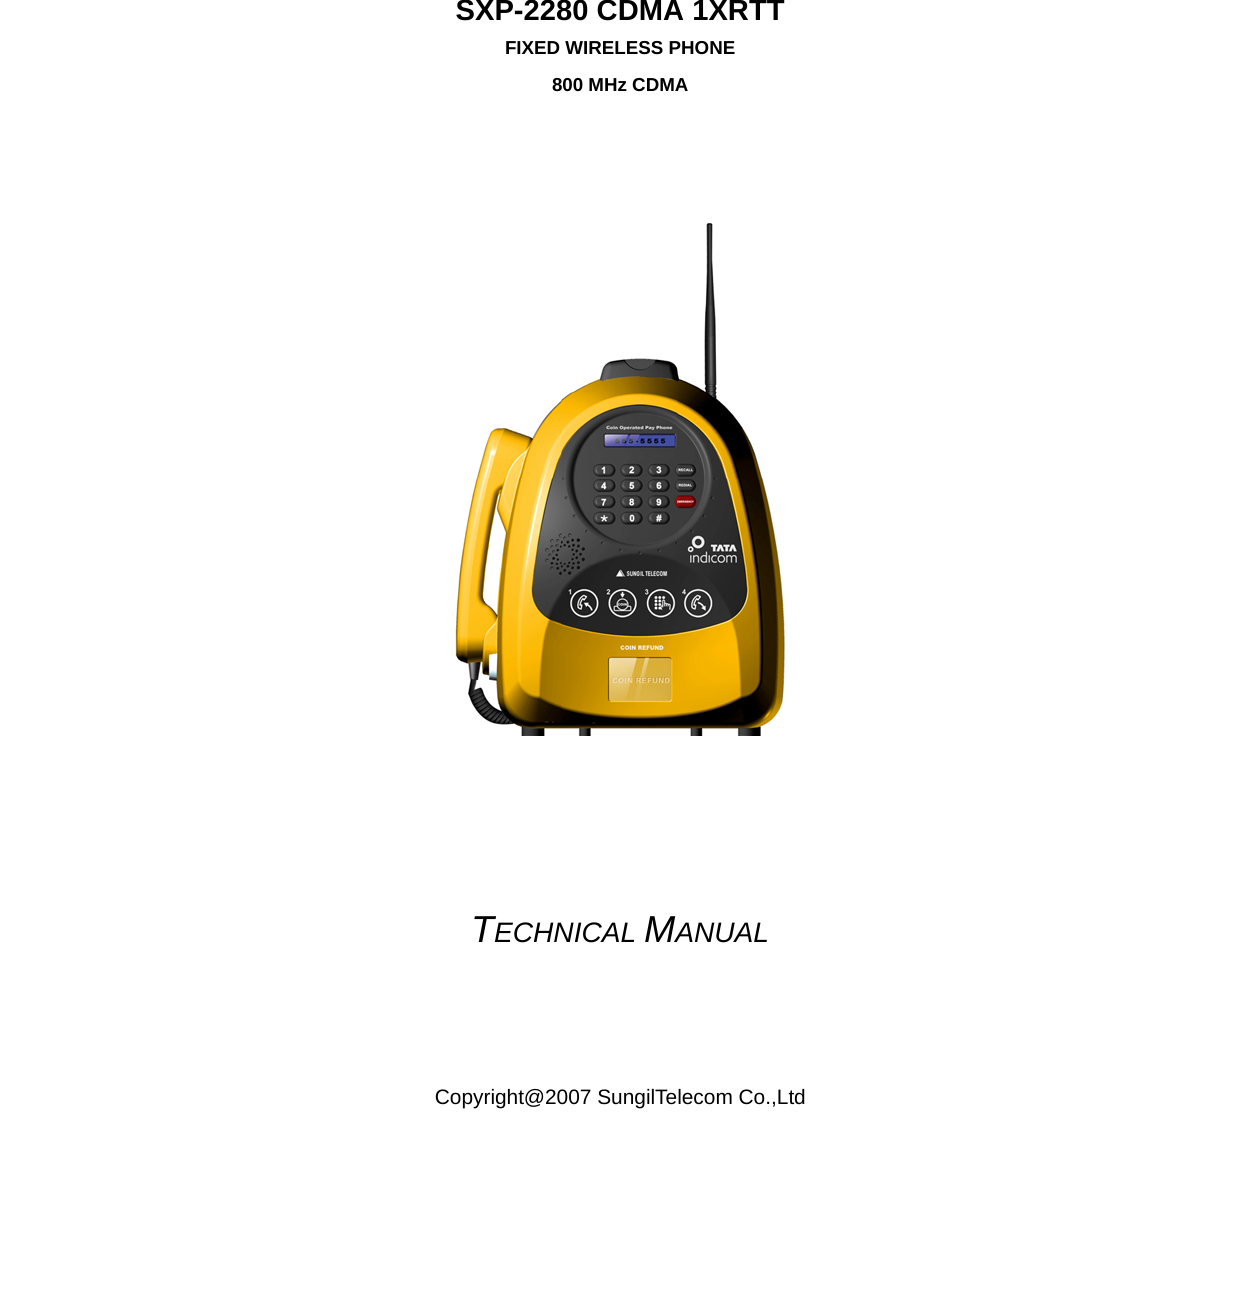      SXP-2280 CDMA 1XRTT FIXED WIRELESS PHONE 800 MHz CDMA         TECHNICAL MANUAL    Copyright@2007 SungilTelecom Co.,Ltd  